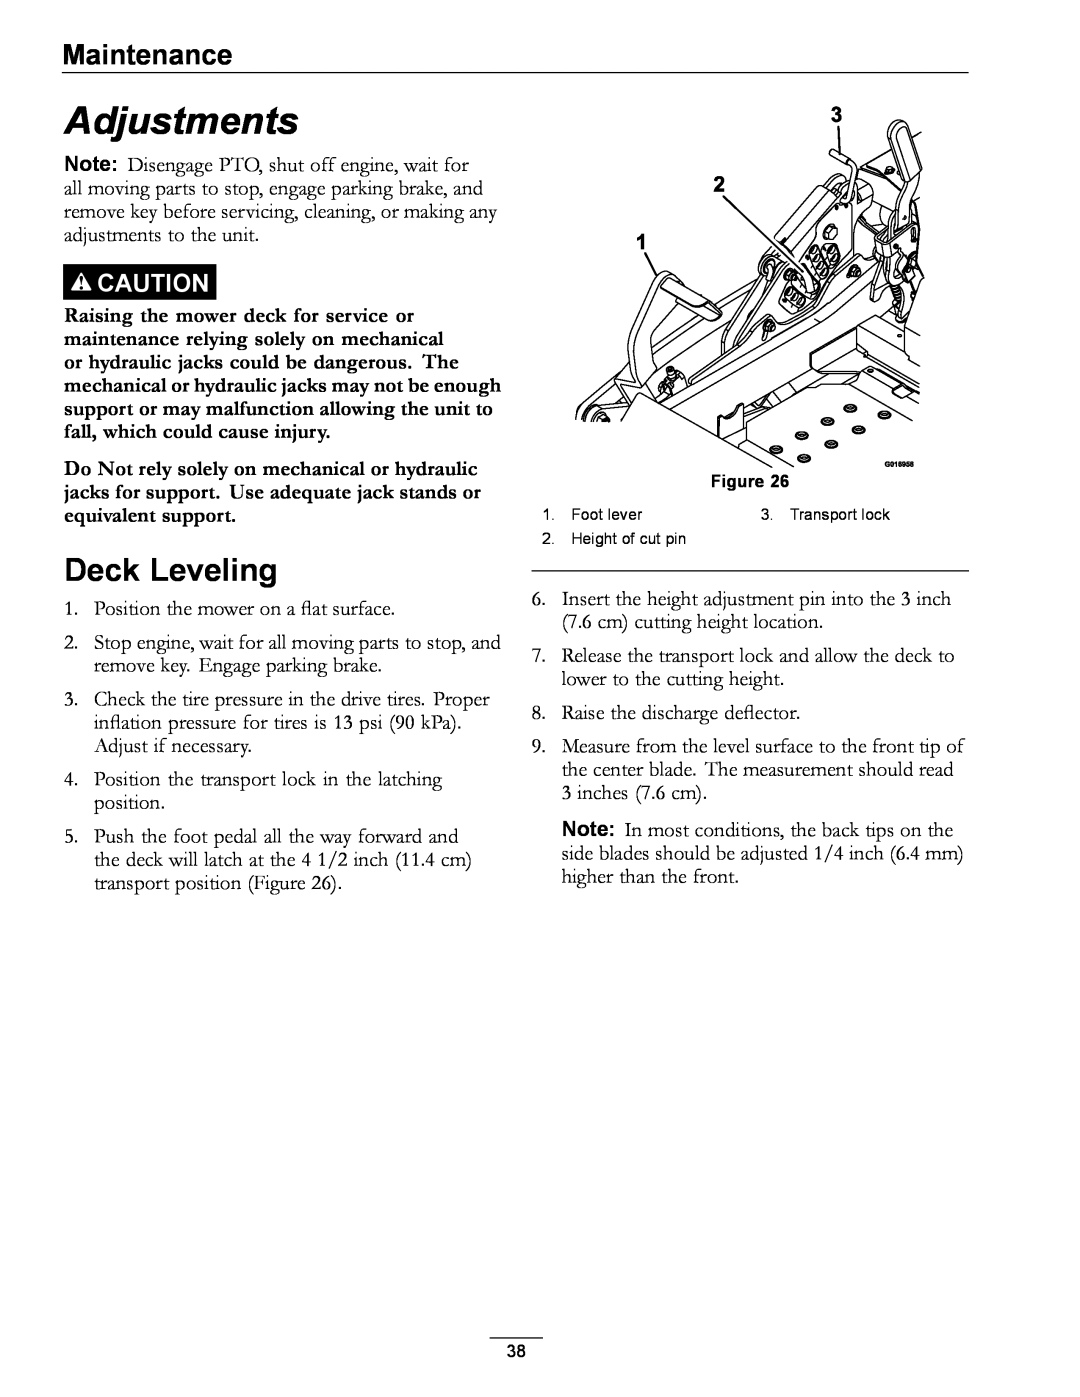 Exmark 000 & higher, 312 manual Adjustments, Deck Leveling, Maintenance 